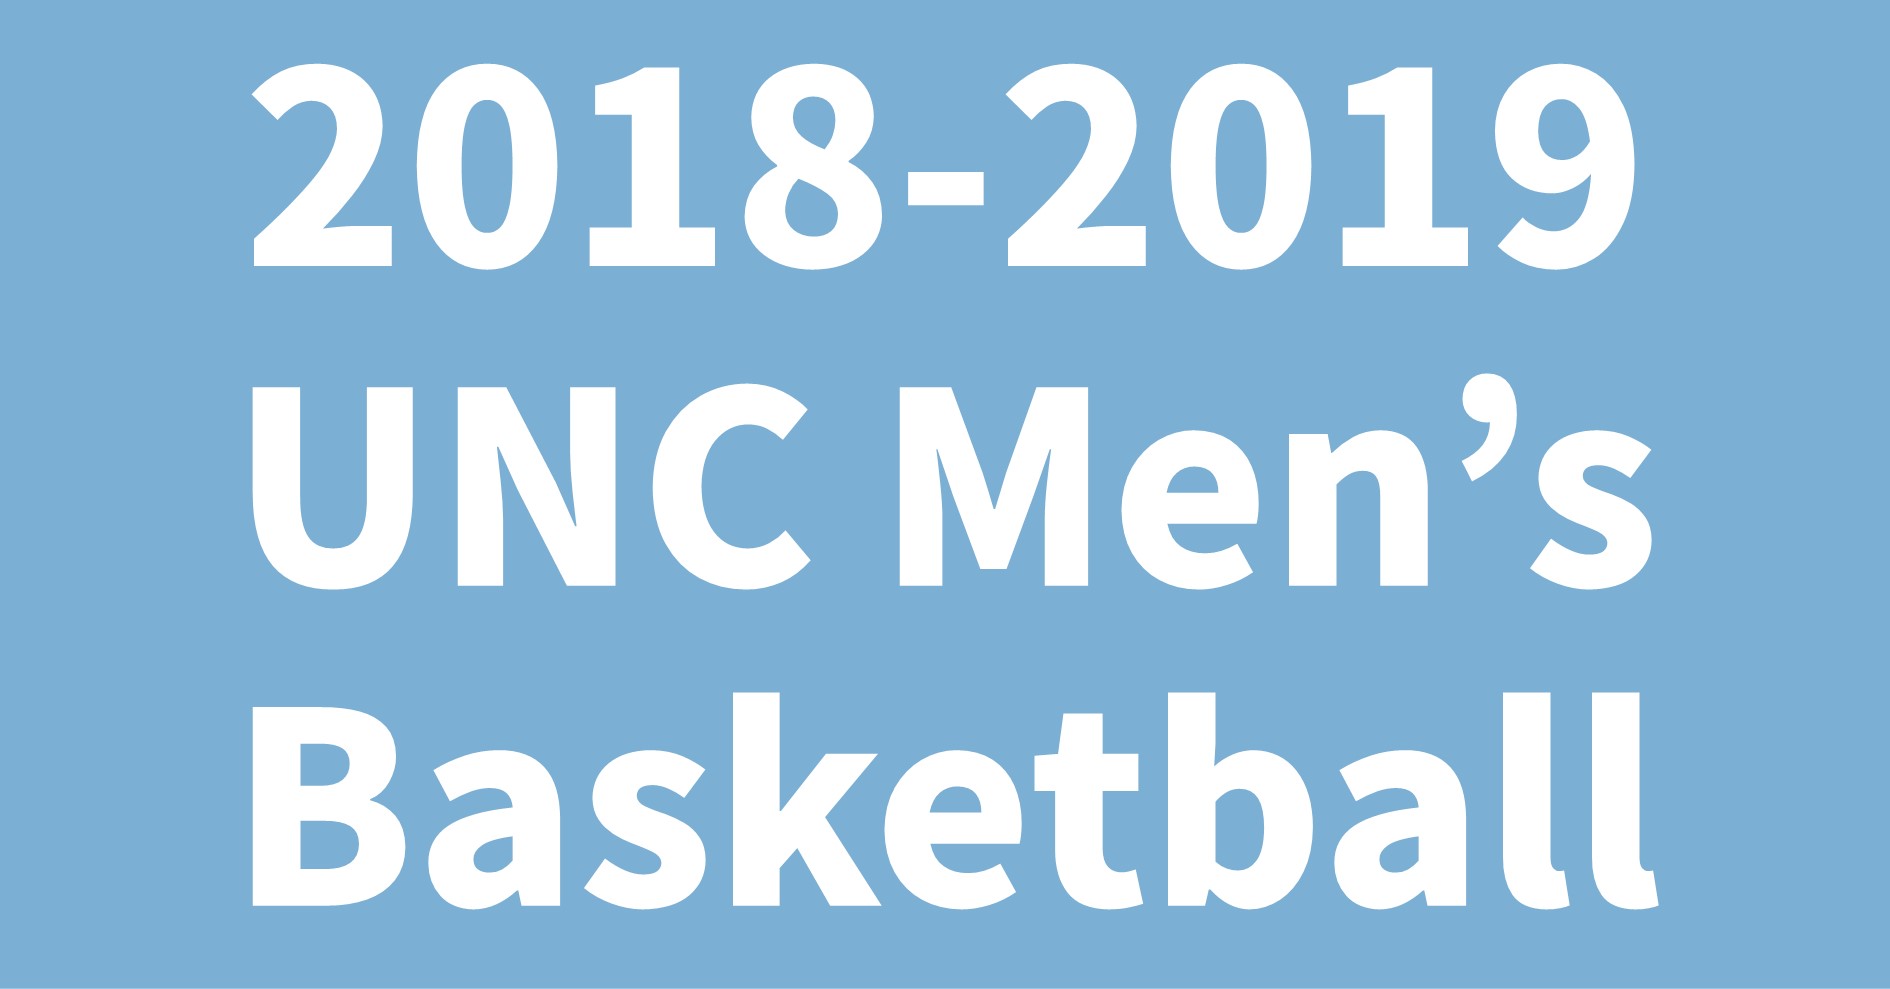 2018-2019 UNC Men's Basketball